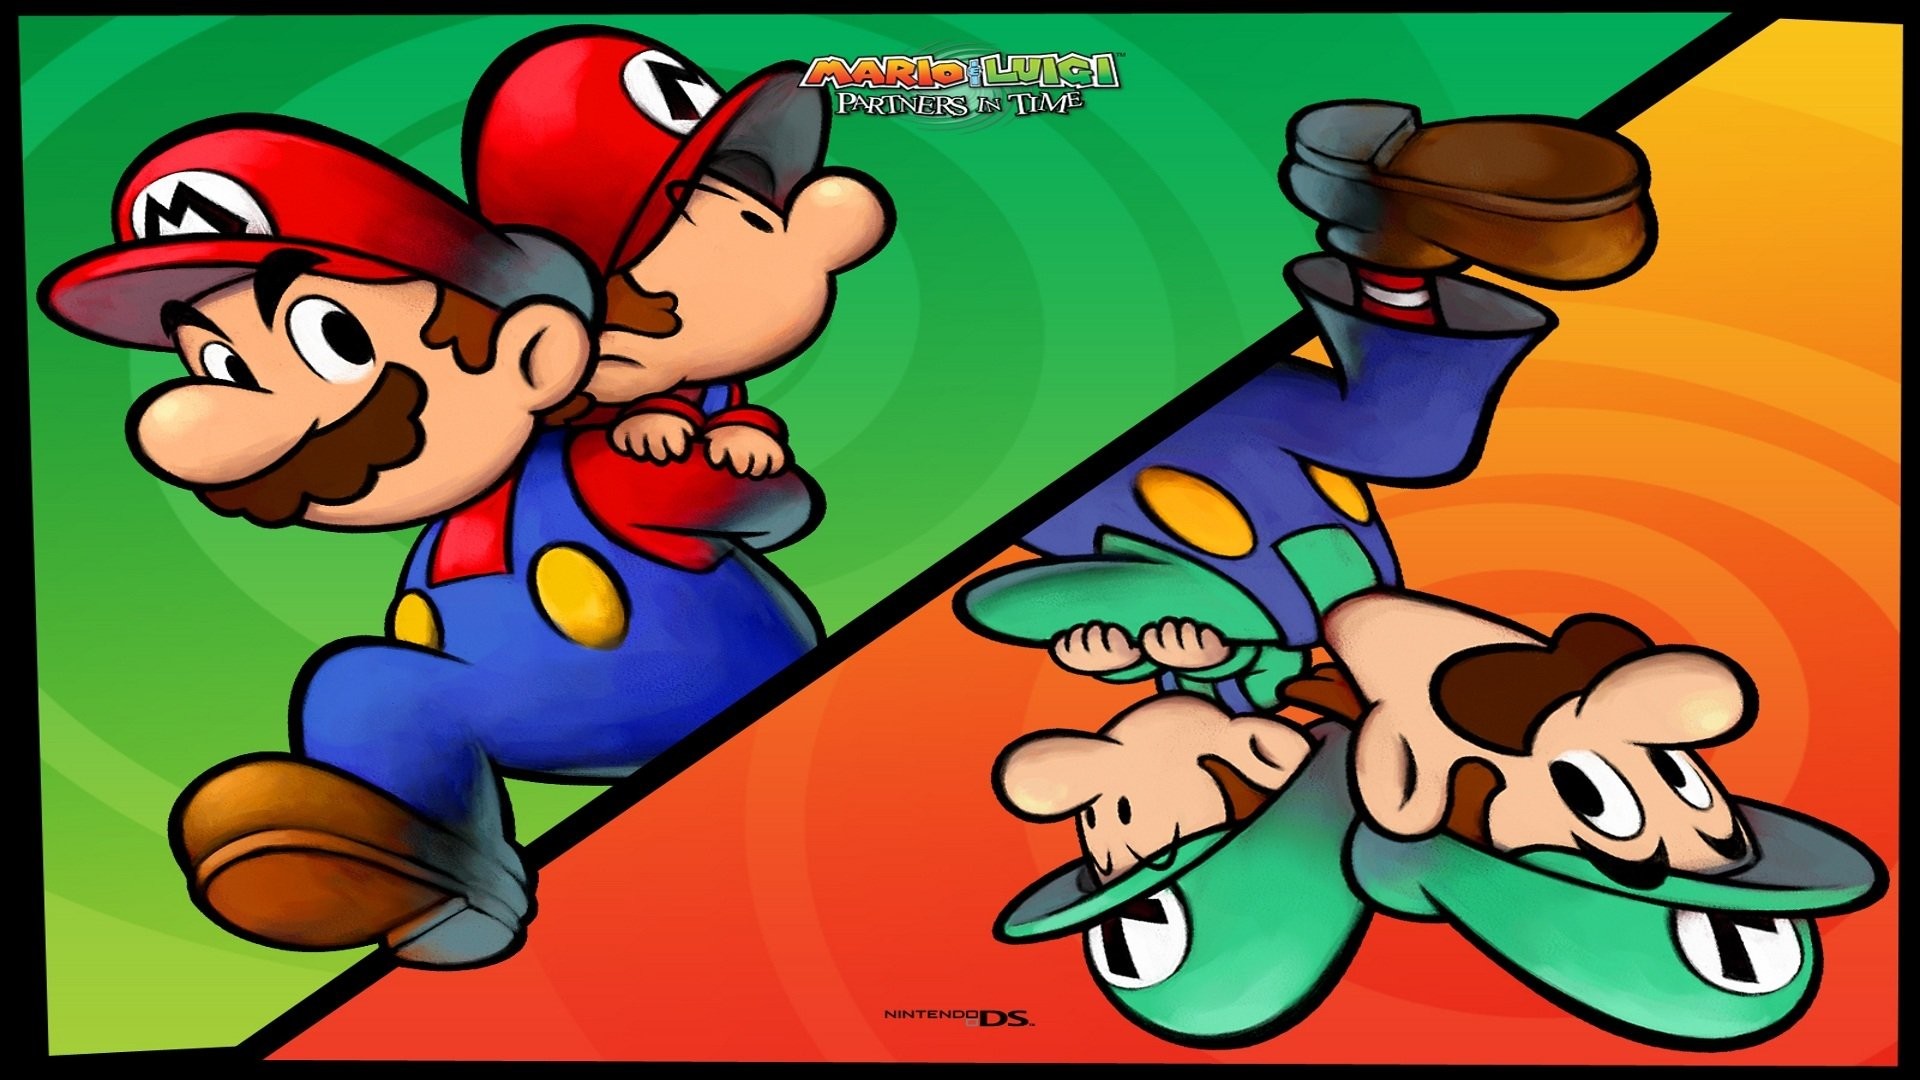 100+] Luigi Wallpapers | Wallpapers.com